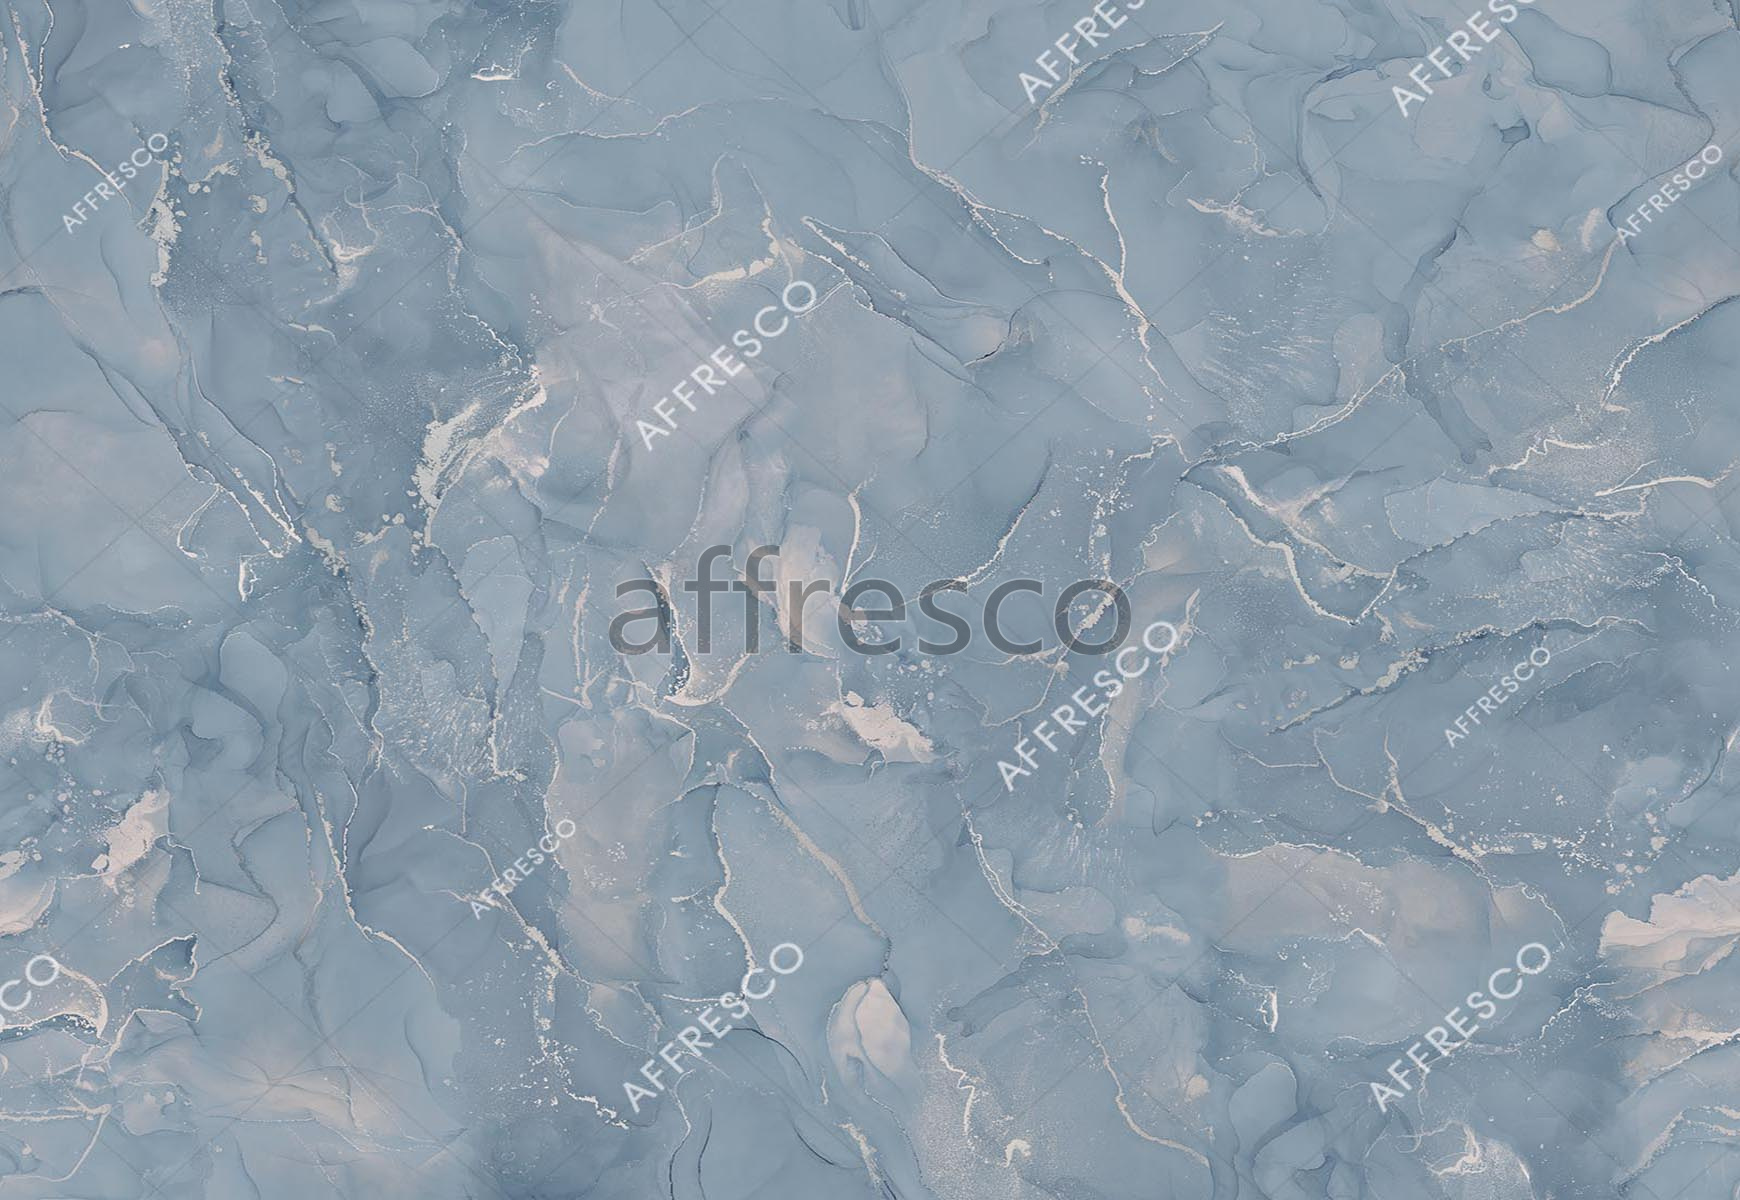 ID139088 | Fluid | ice stone | Affresco Factory